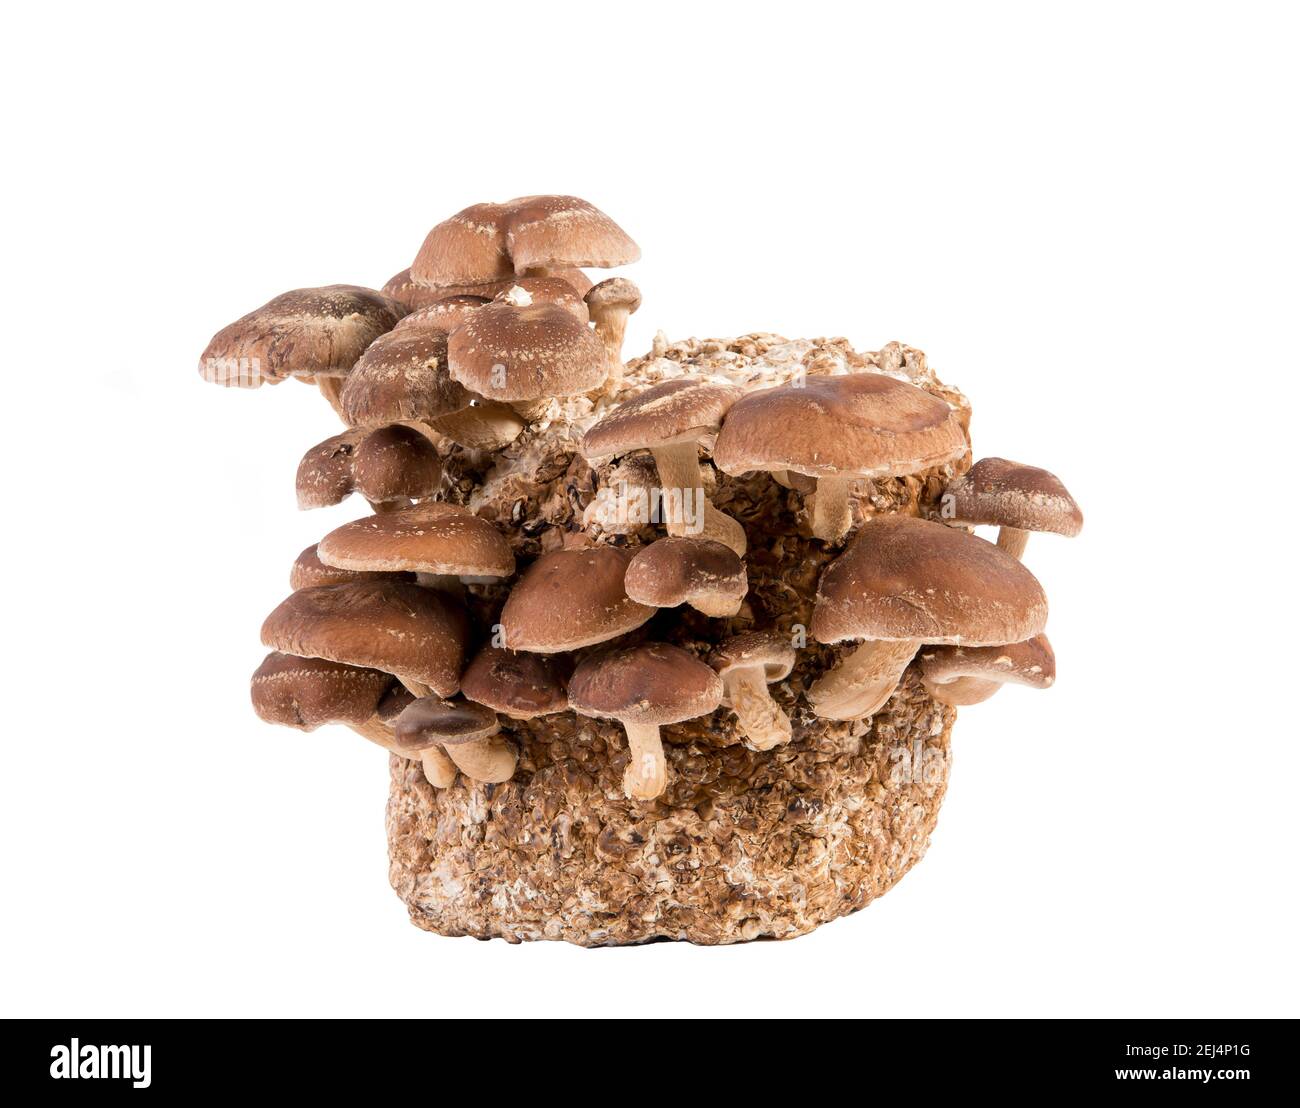 Group of edible Shiitake mushrooms, Lentinula edodes growing on log, isolated on white background. Studio shot, copy space. Stock Photo